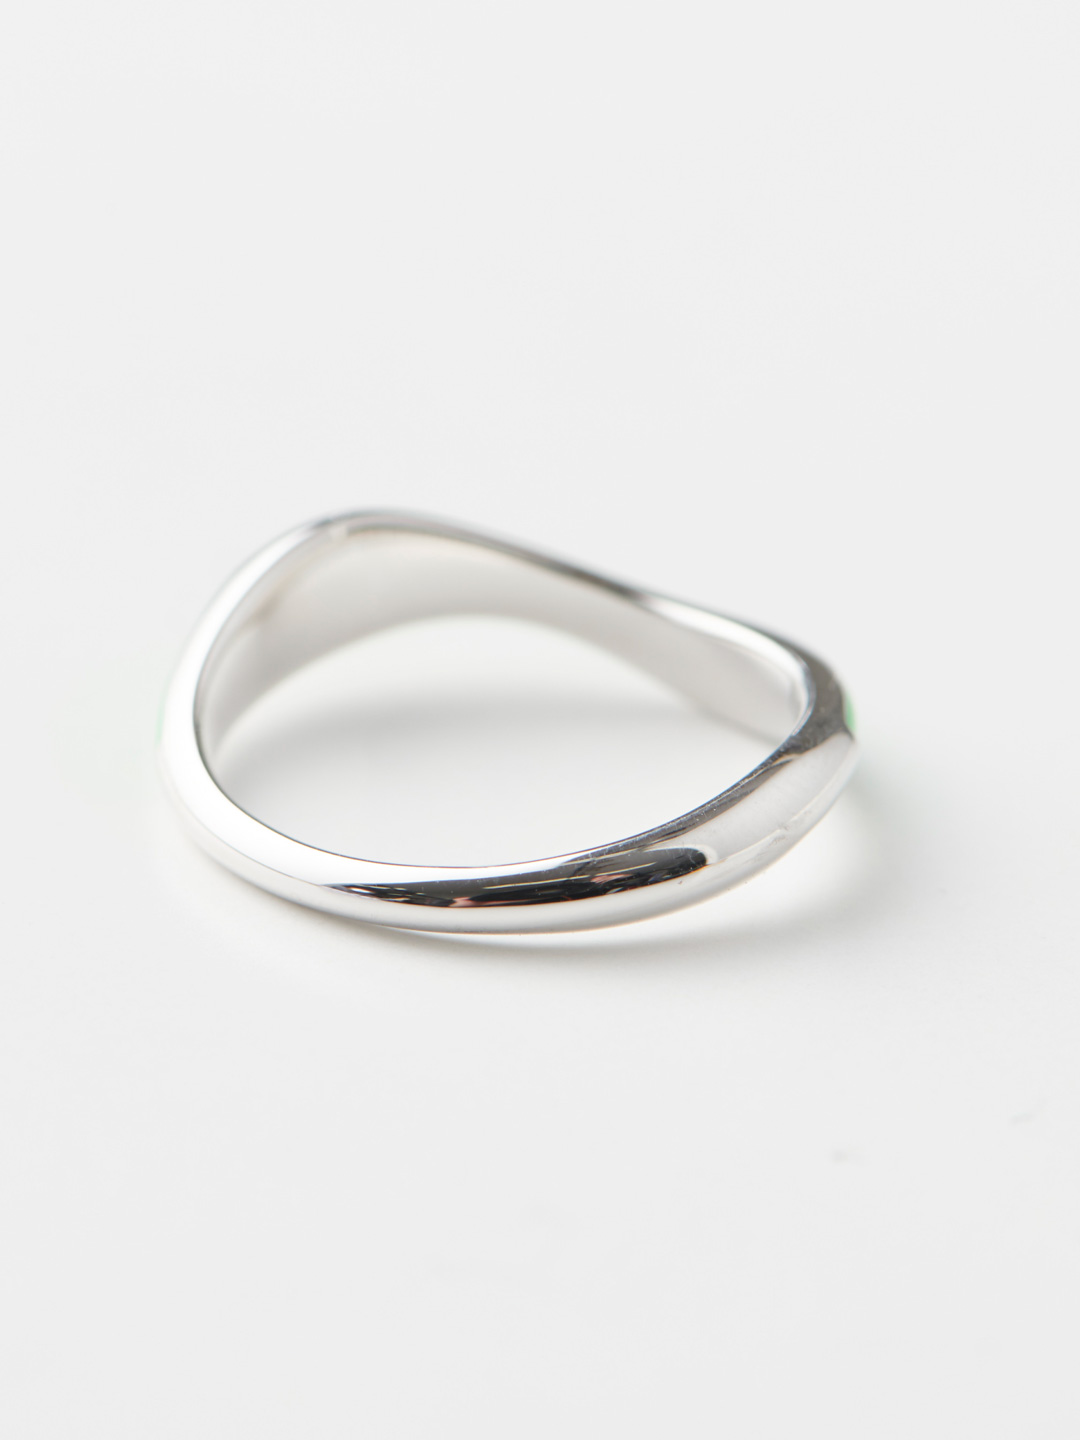 Aura Neon Green Ring - Silver